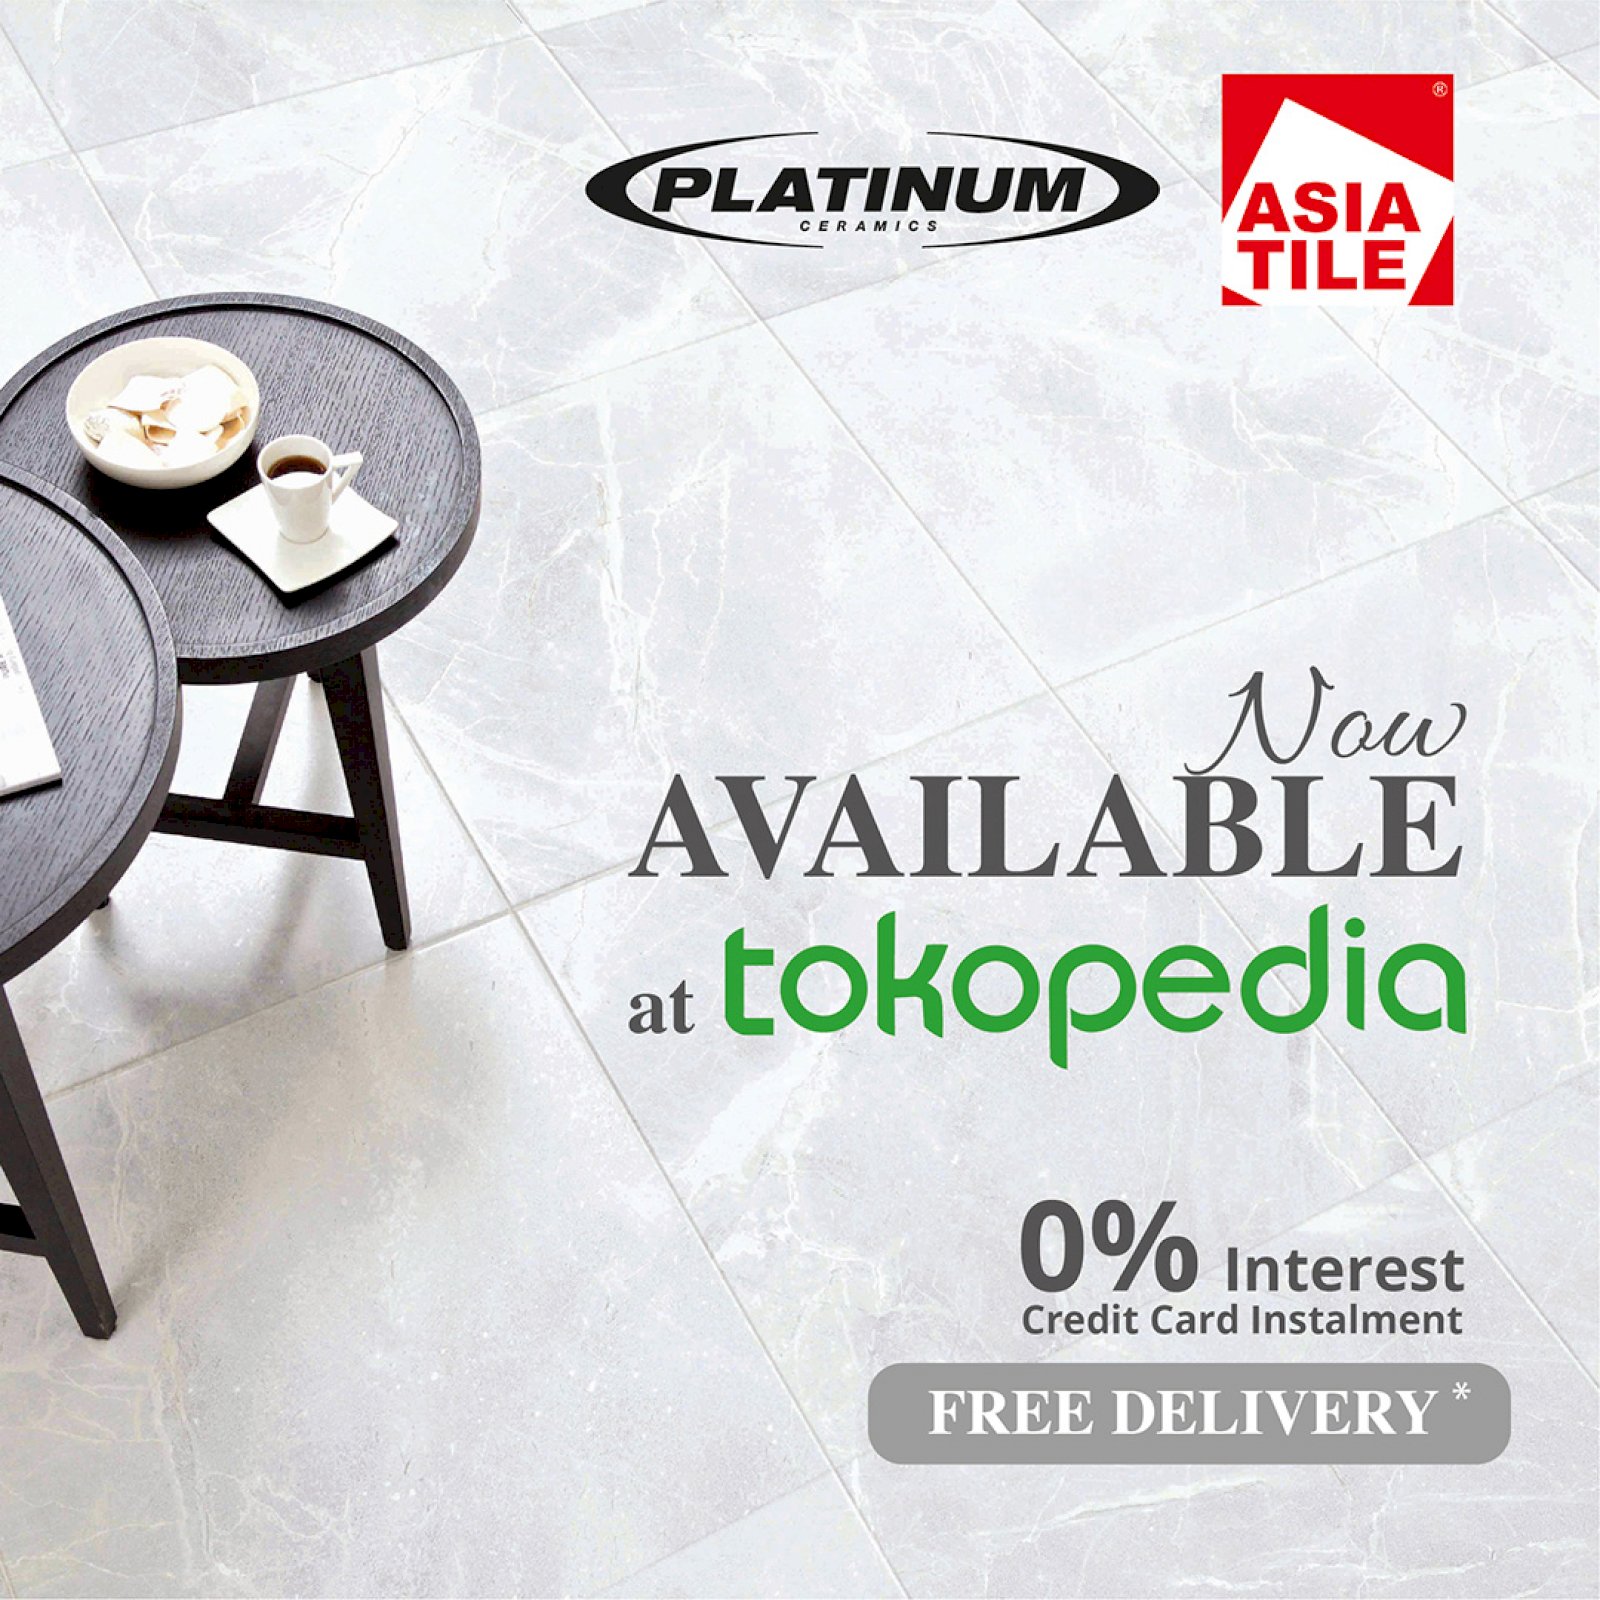 Platinum Ceramics & Asia Tile are now available at Tokopedia